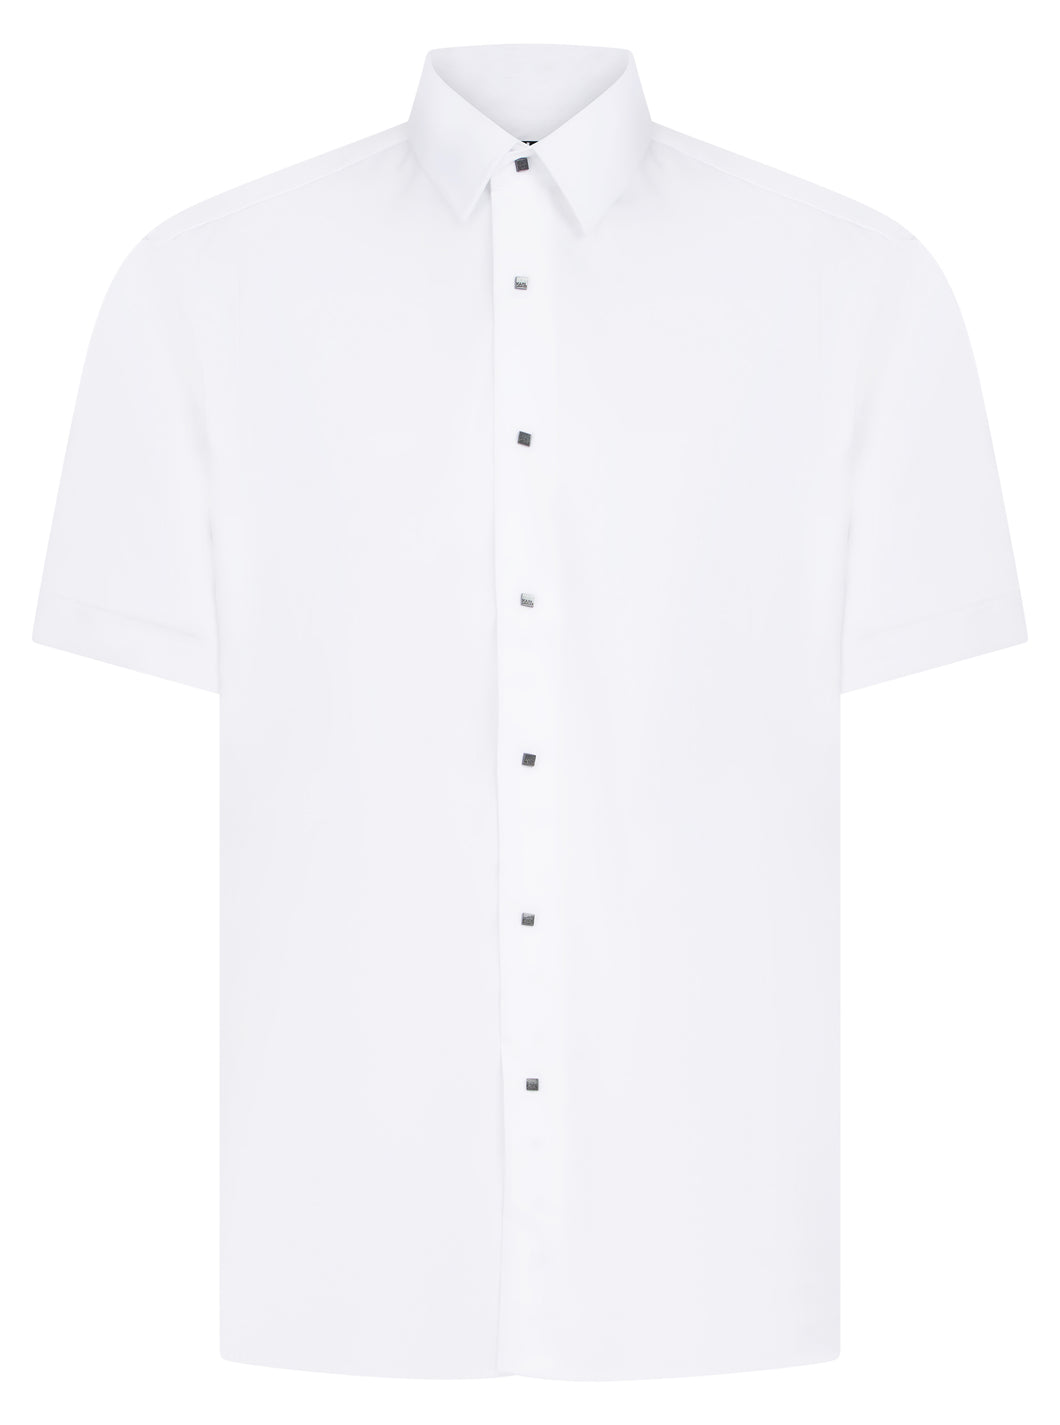 Lagerfeld Press Stud Shirt White